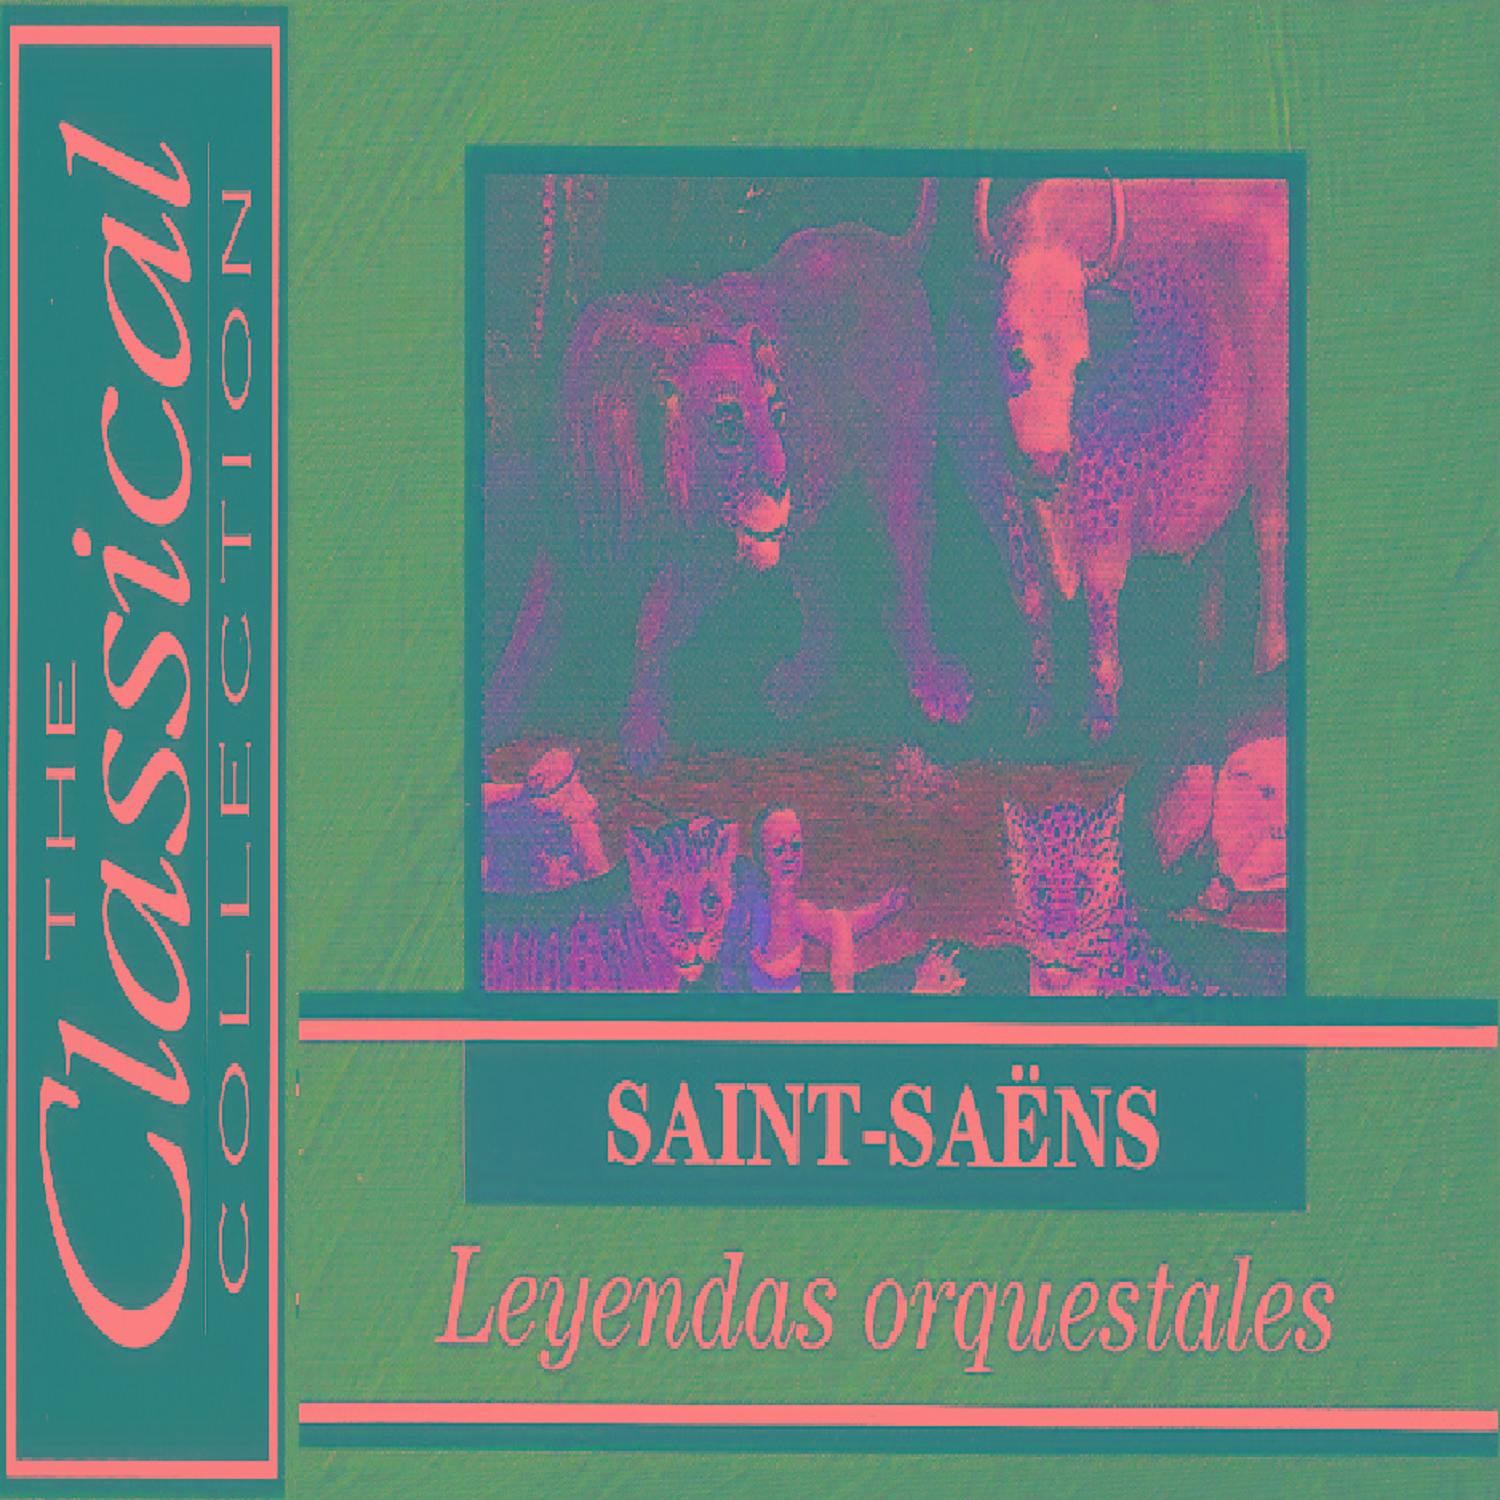 The Classical Collection  SaintSa ns  Leyendas orquestrales